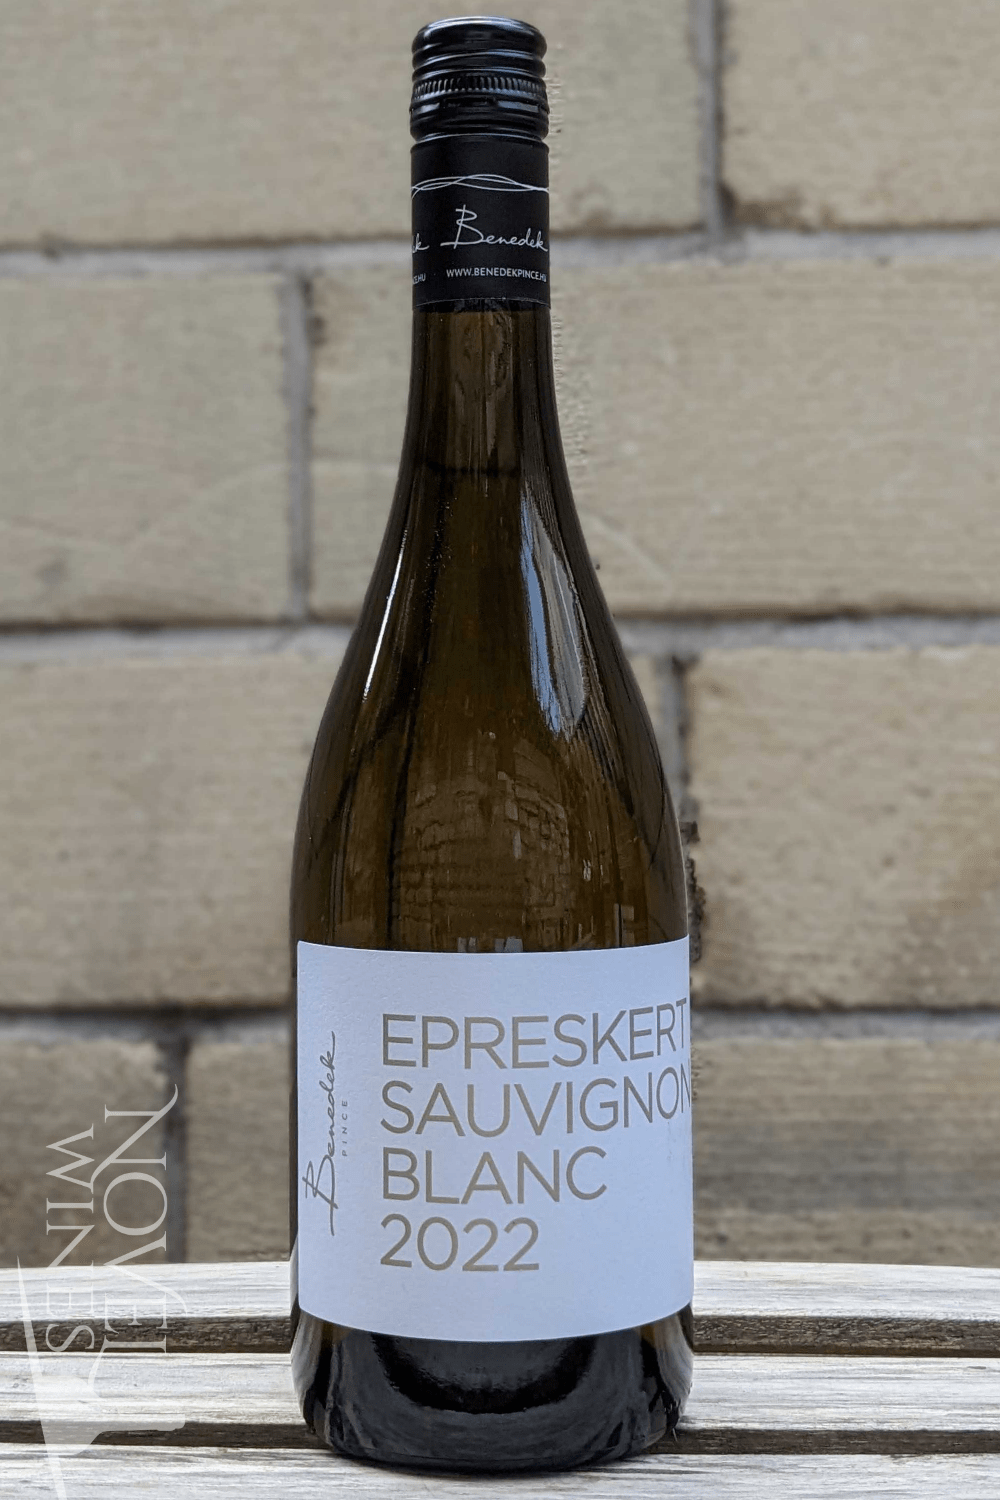 Benedek White Wine Benedek Epreskert Sauvignon Blanc 2021, Hungary